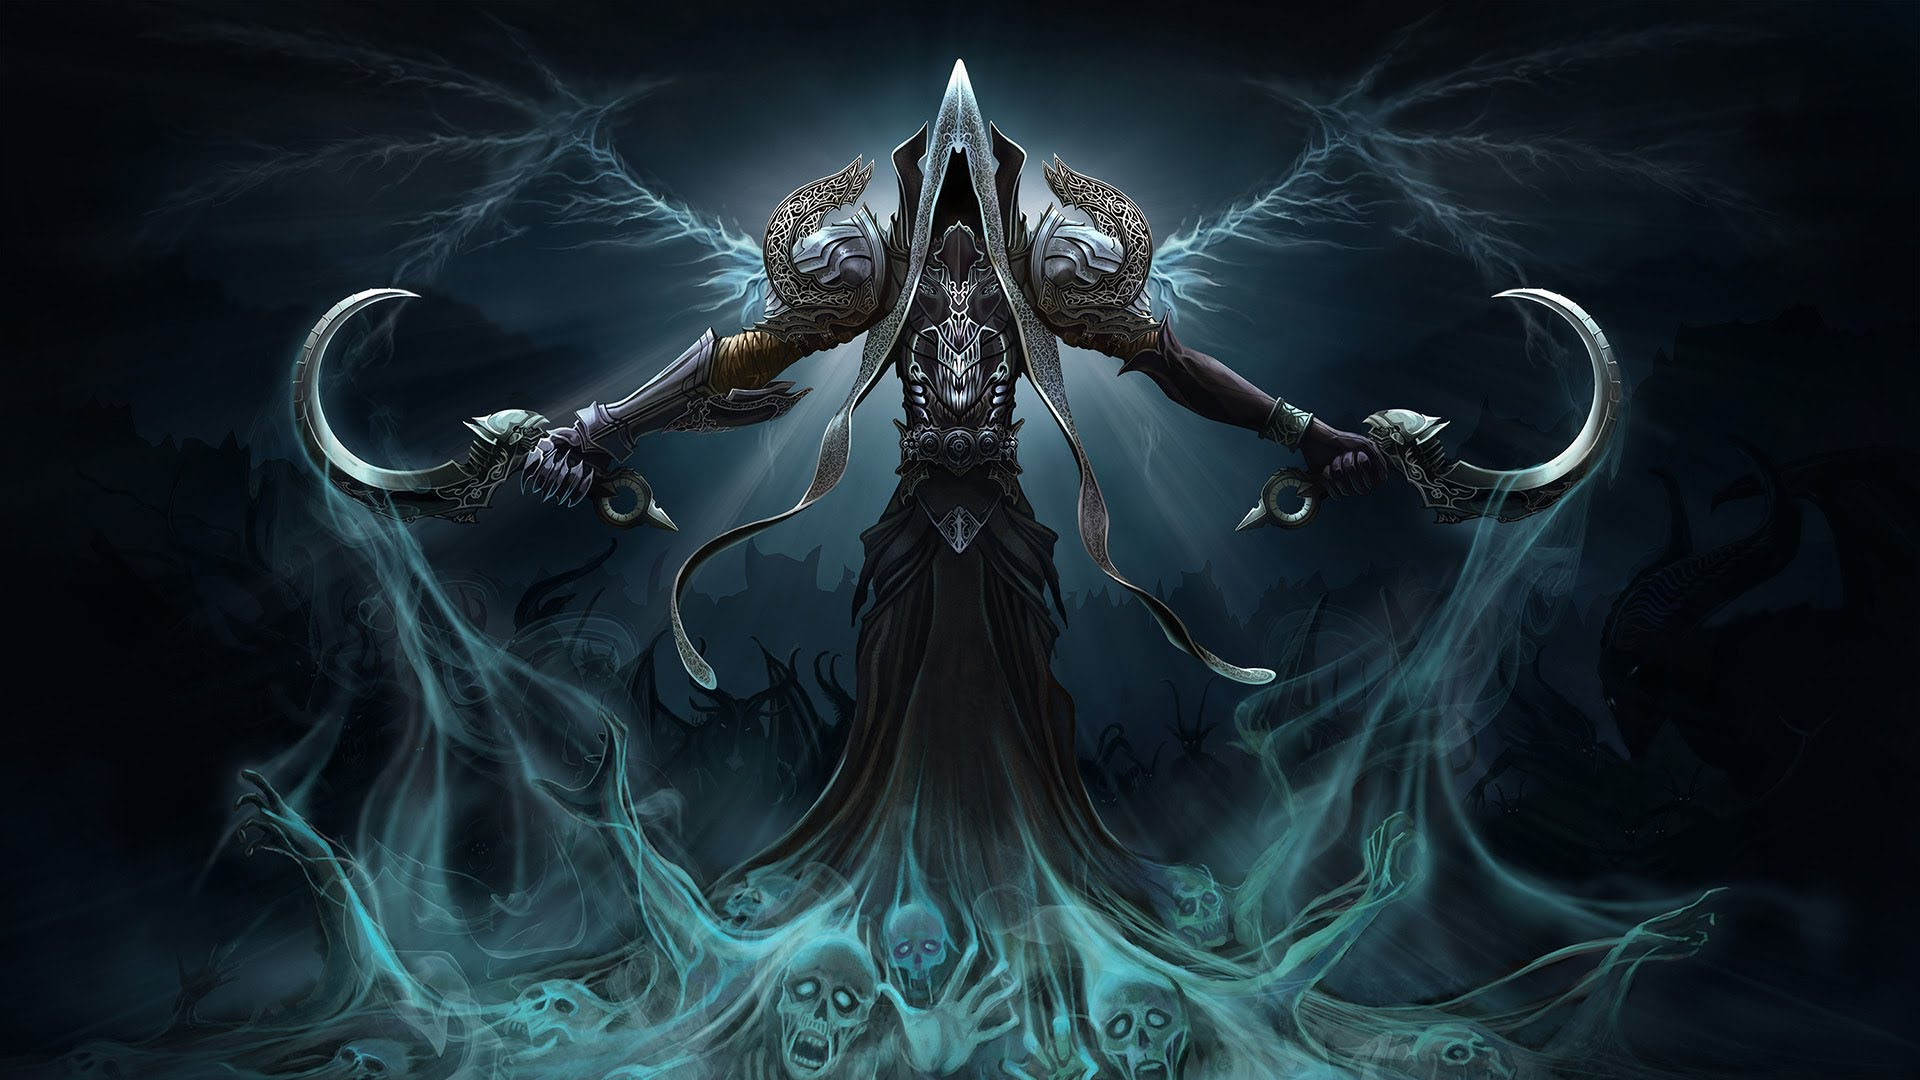 diablo 3 reaper of souls price release